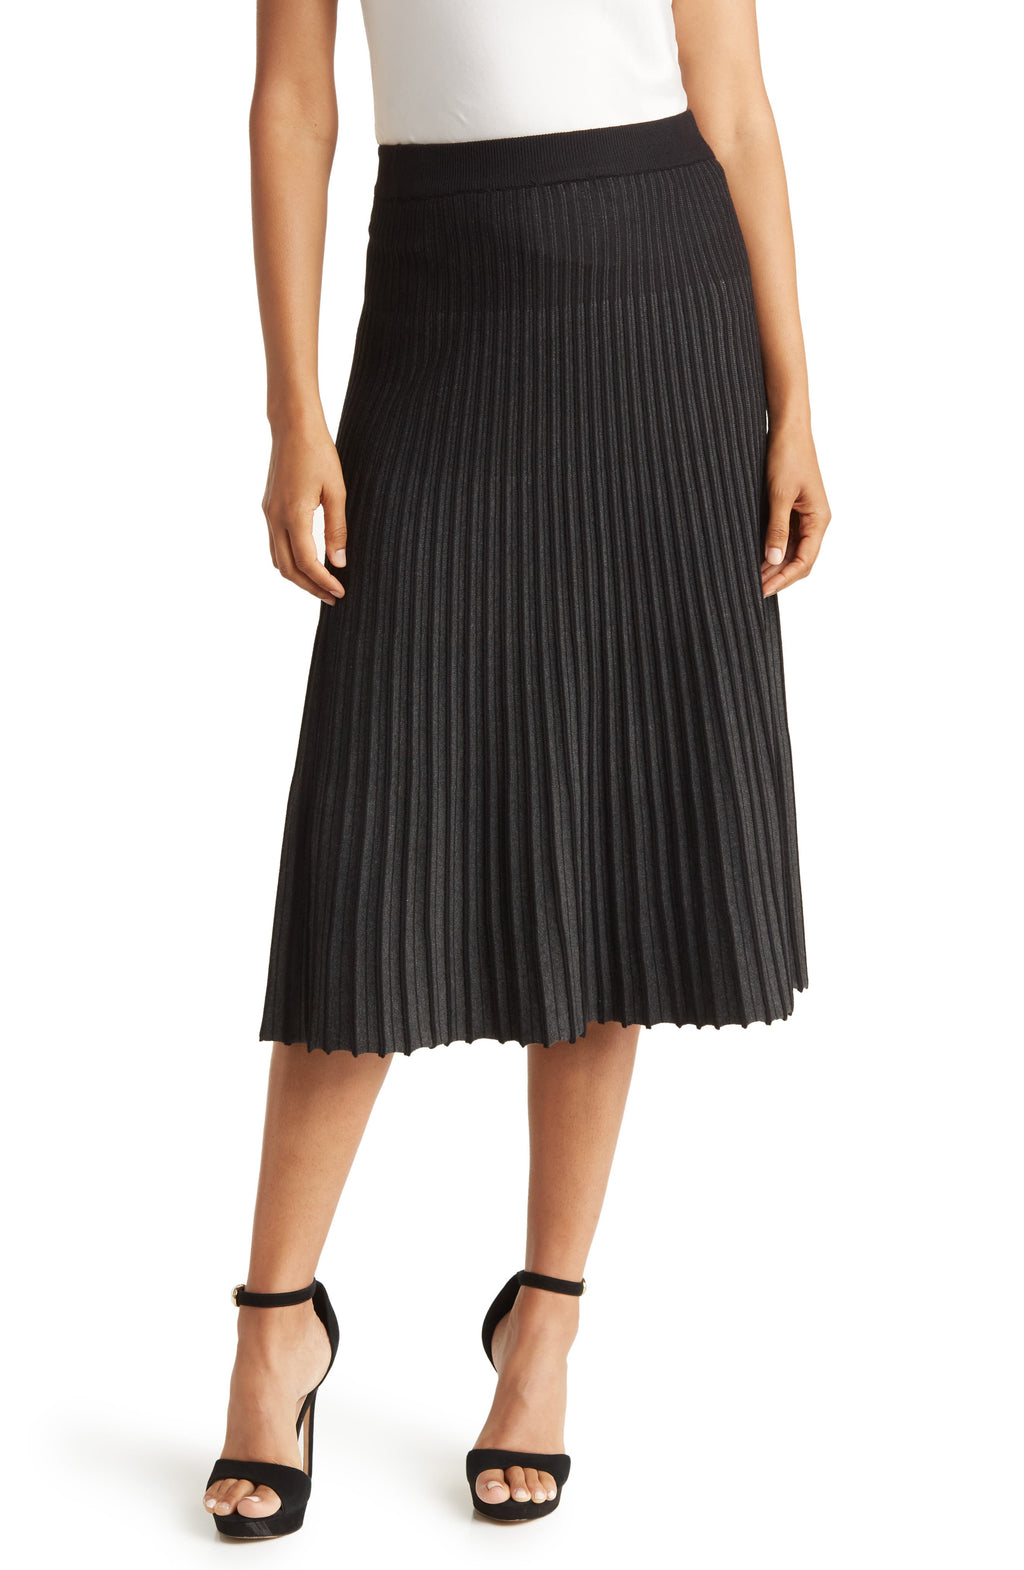 MAXSTUDIO Pleated Sweater Skirt, Main, color, BLACK GREY